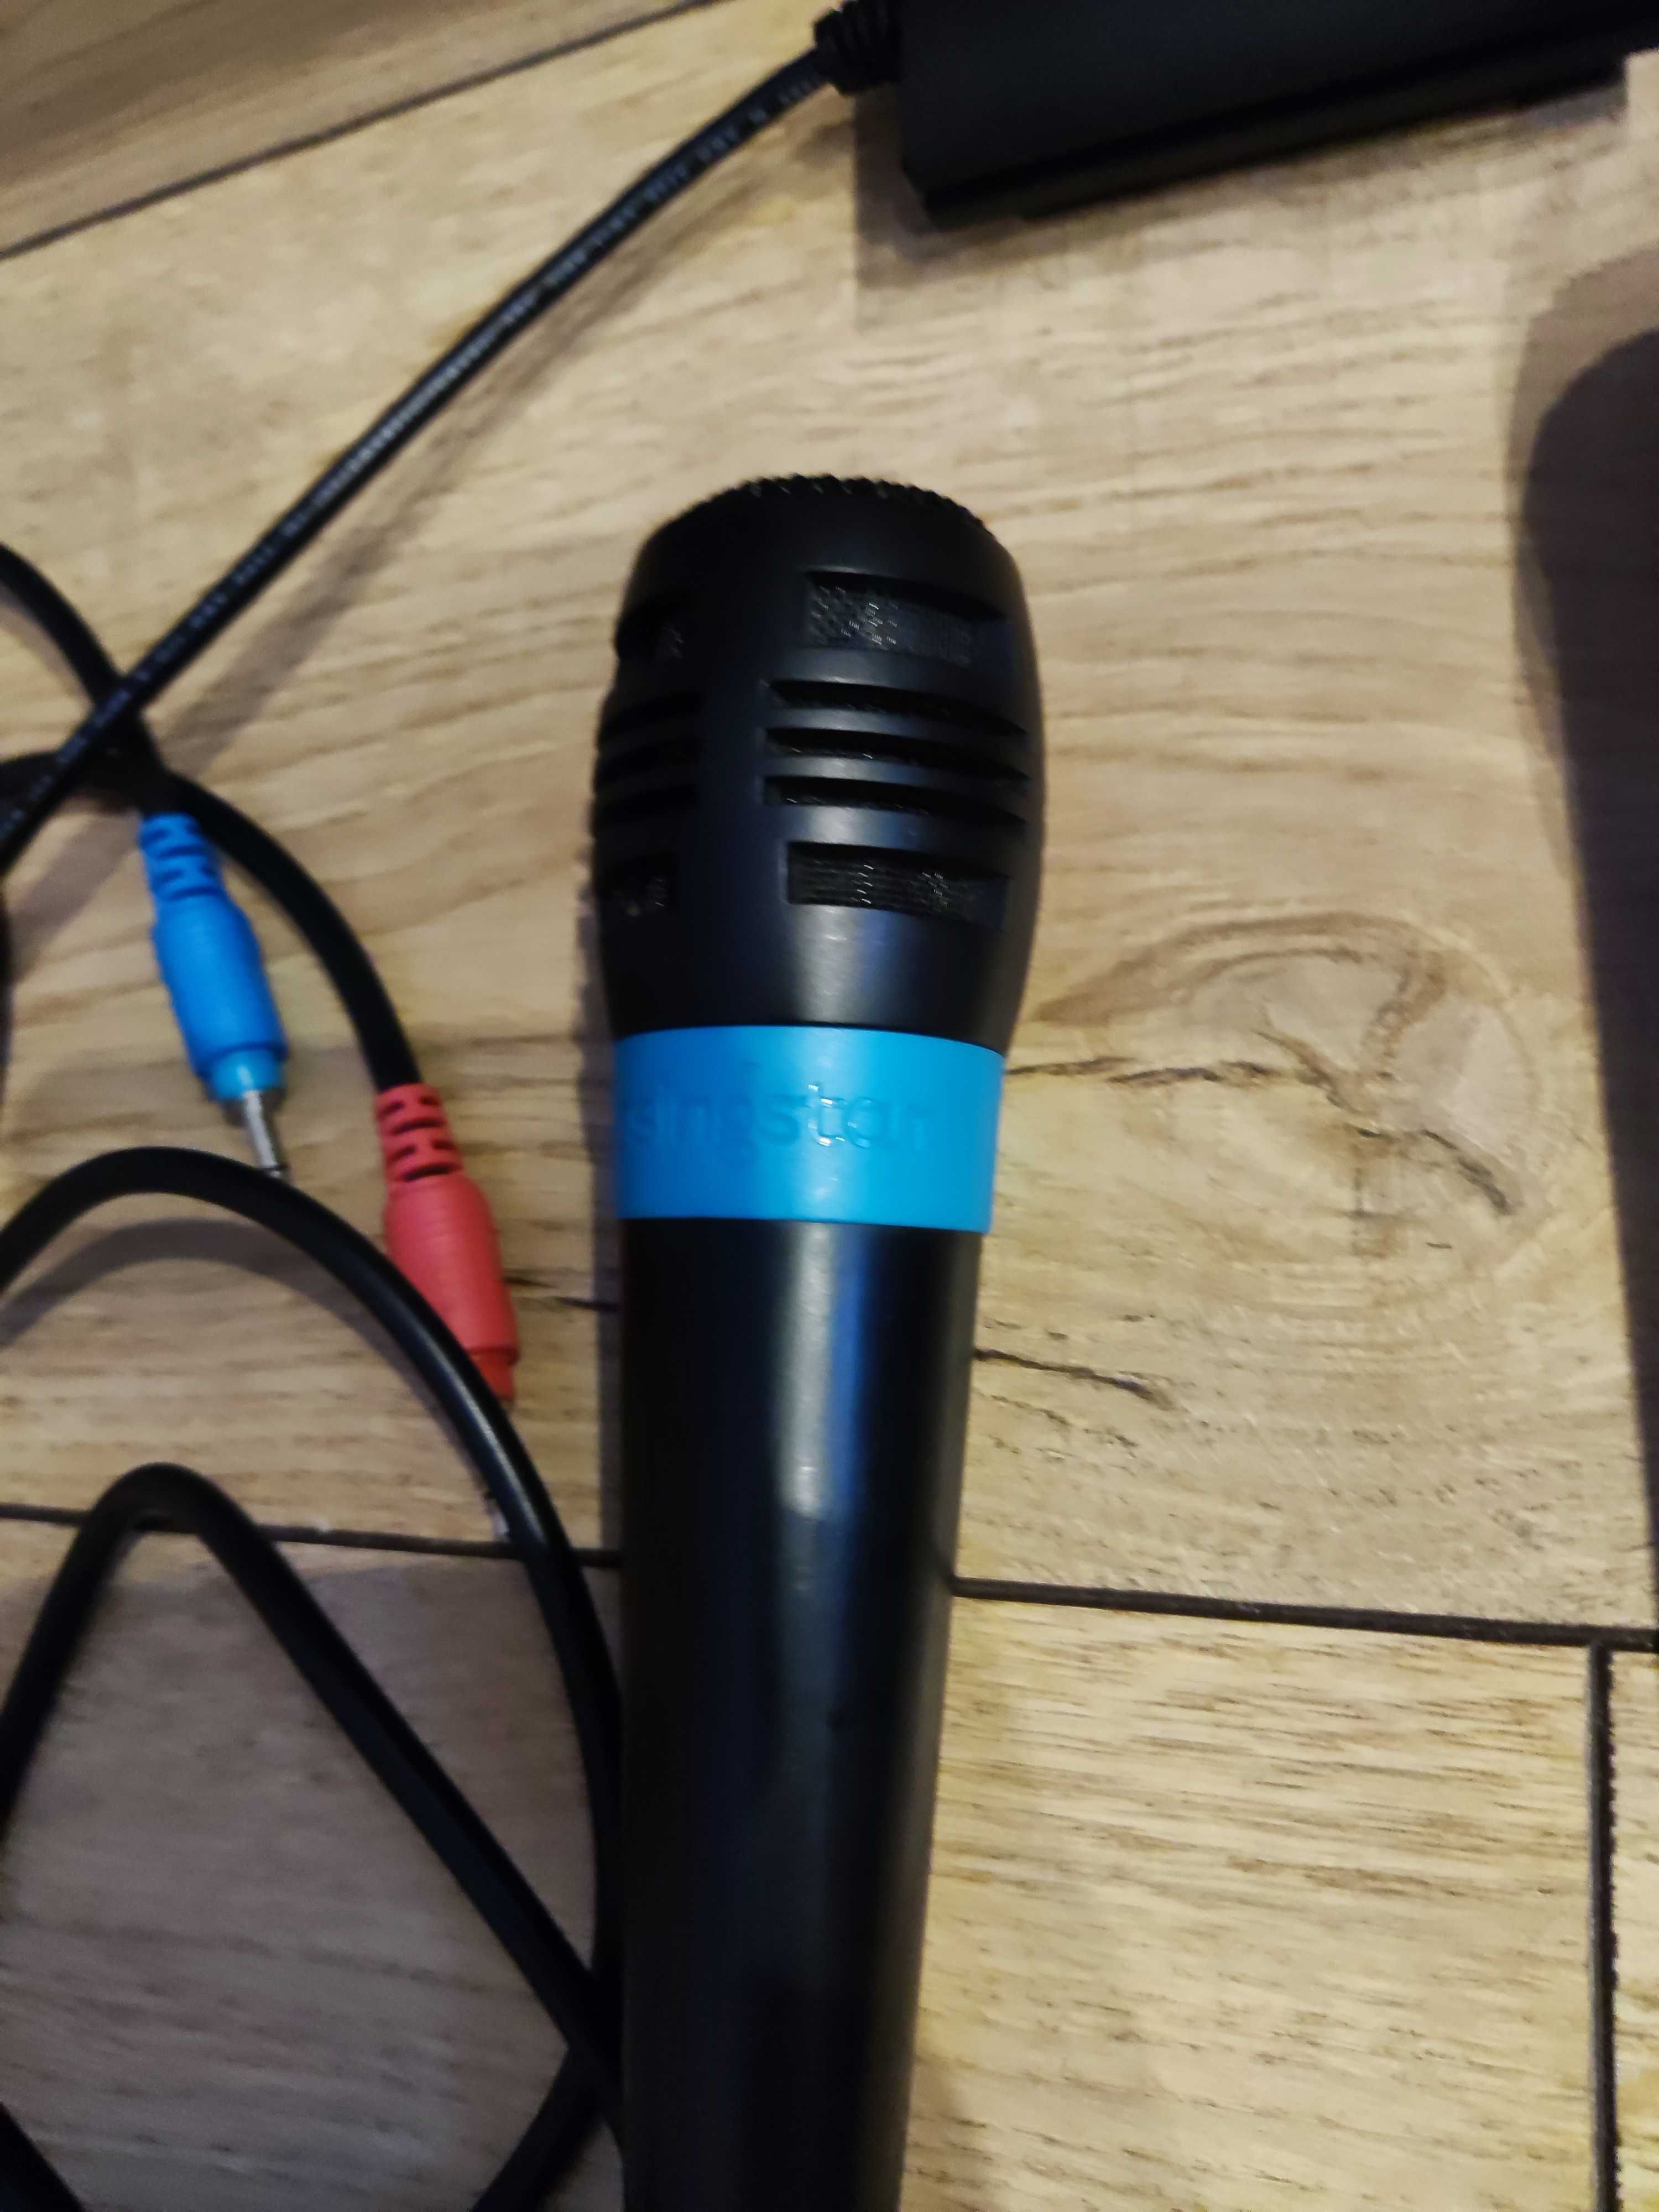 Singstar Zestaw 2 Mikrofony + Adapter Playstation 3 PS3